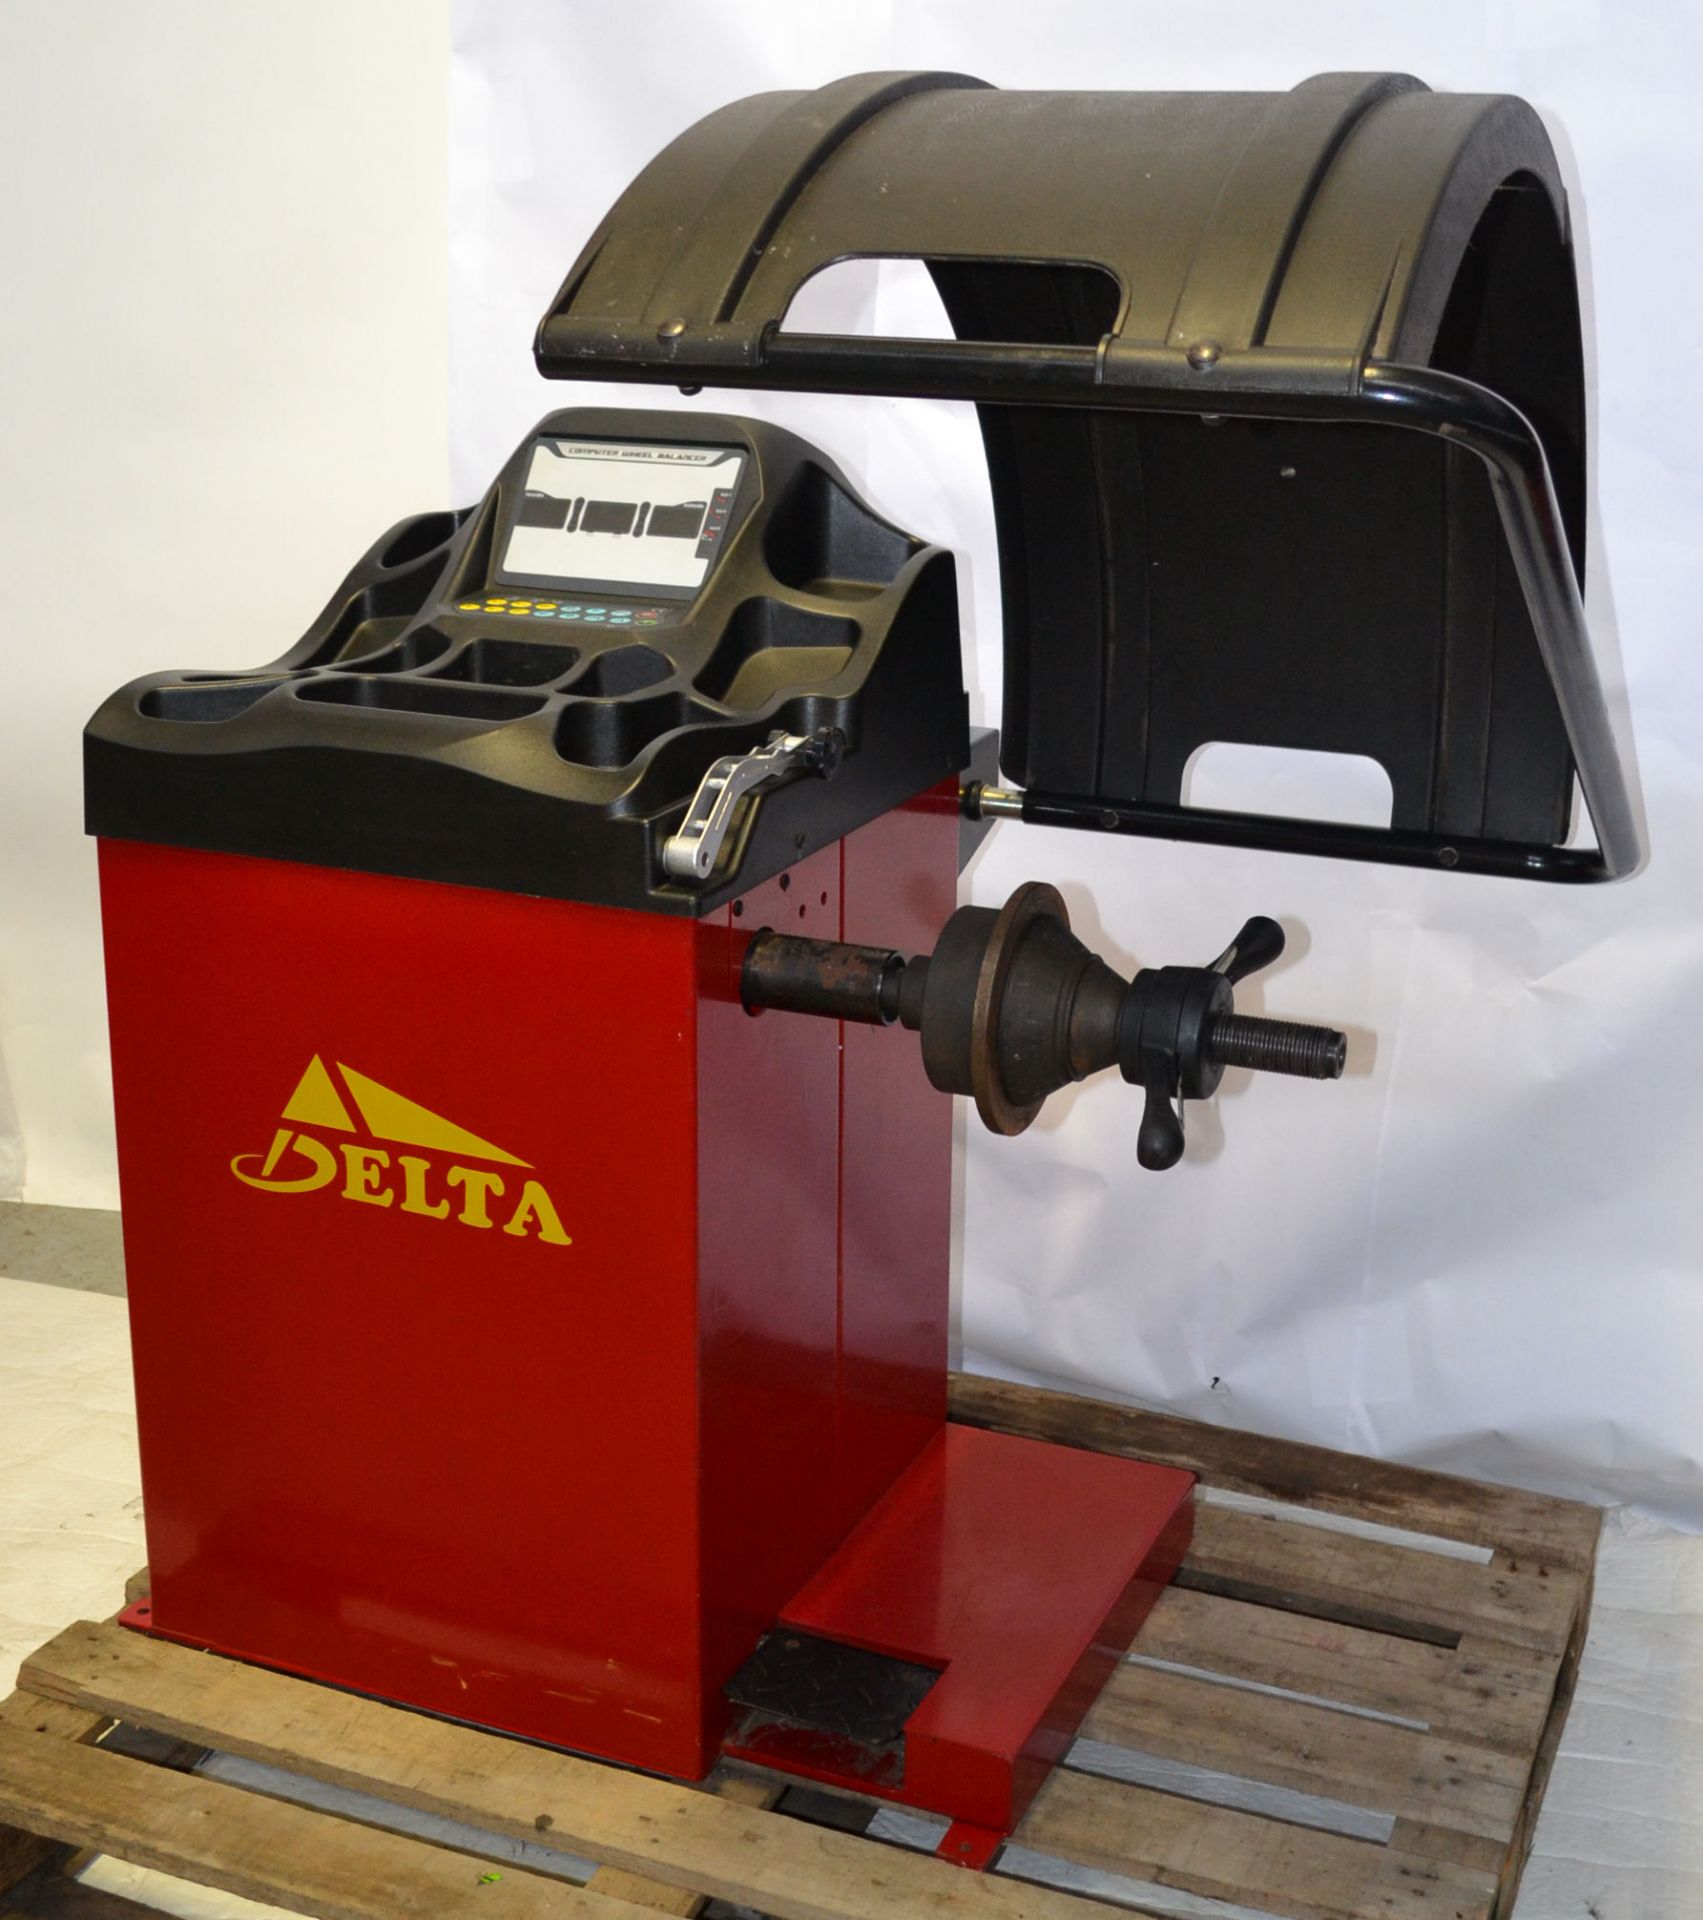 1 x Delta Workshop Wheel Balancer - Model SBM95AP - Excellent Condition - CL007 - Location: - Image 4 of 15